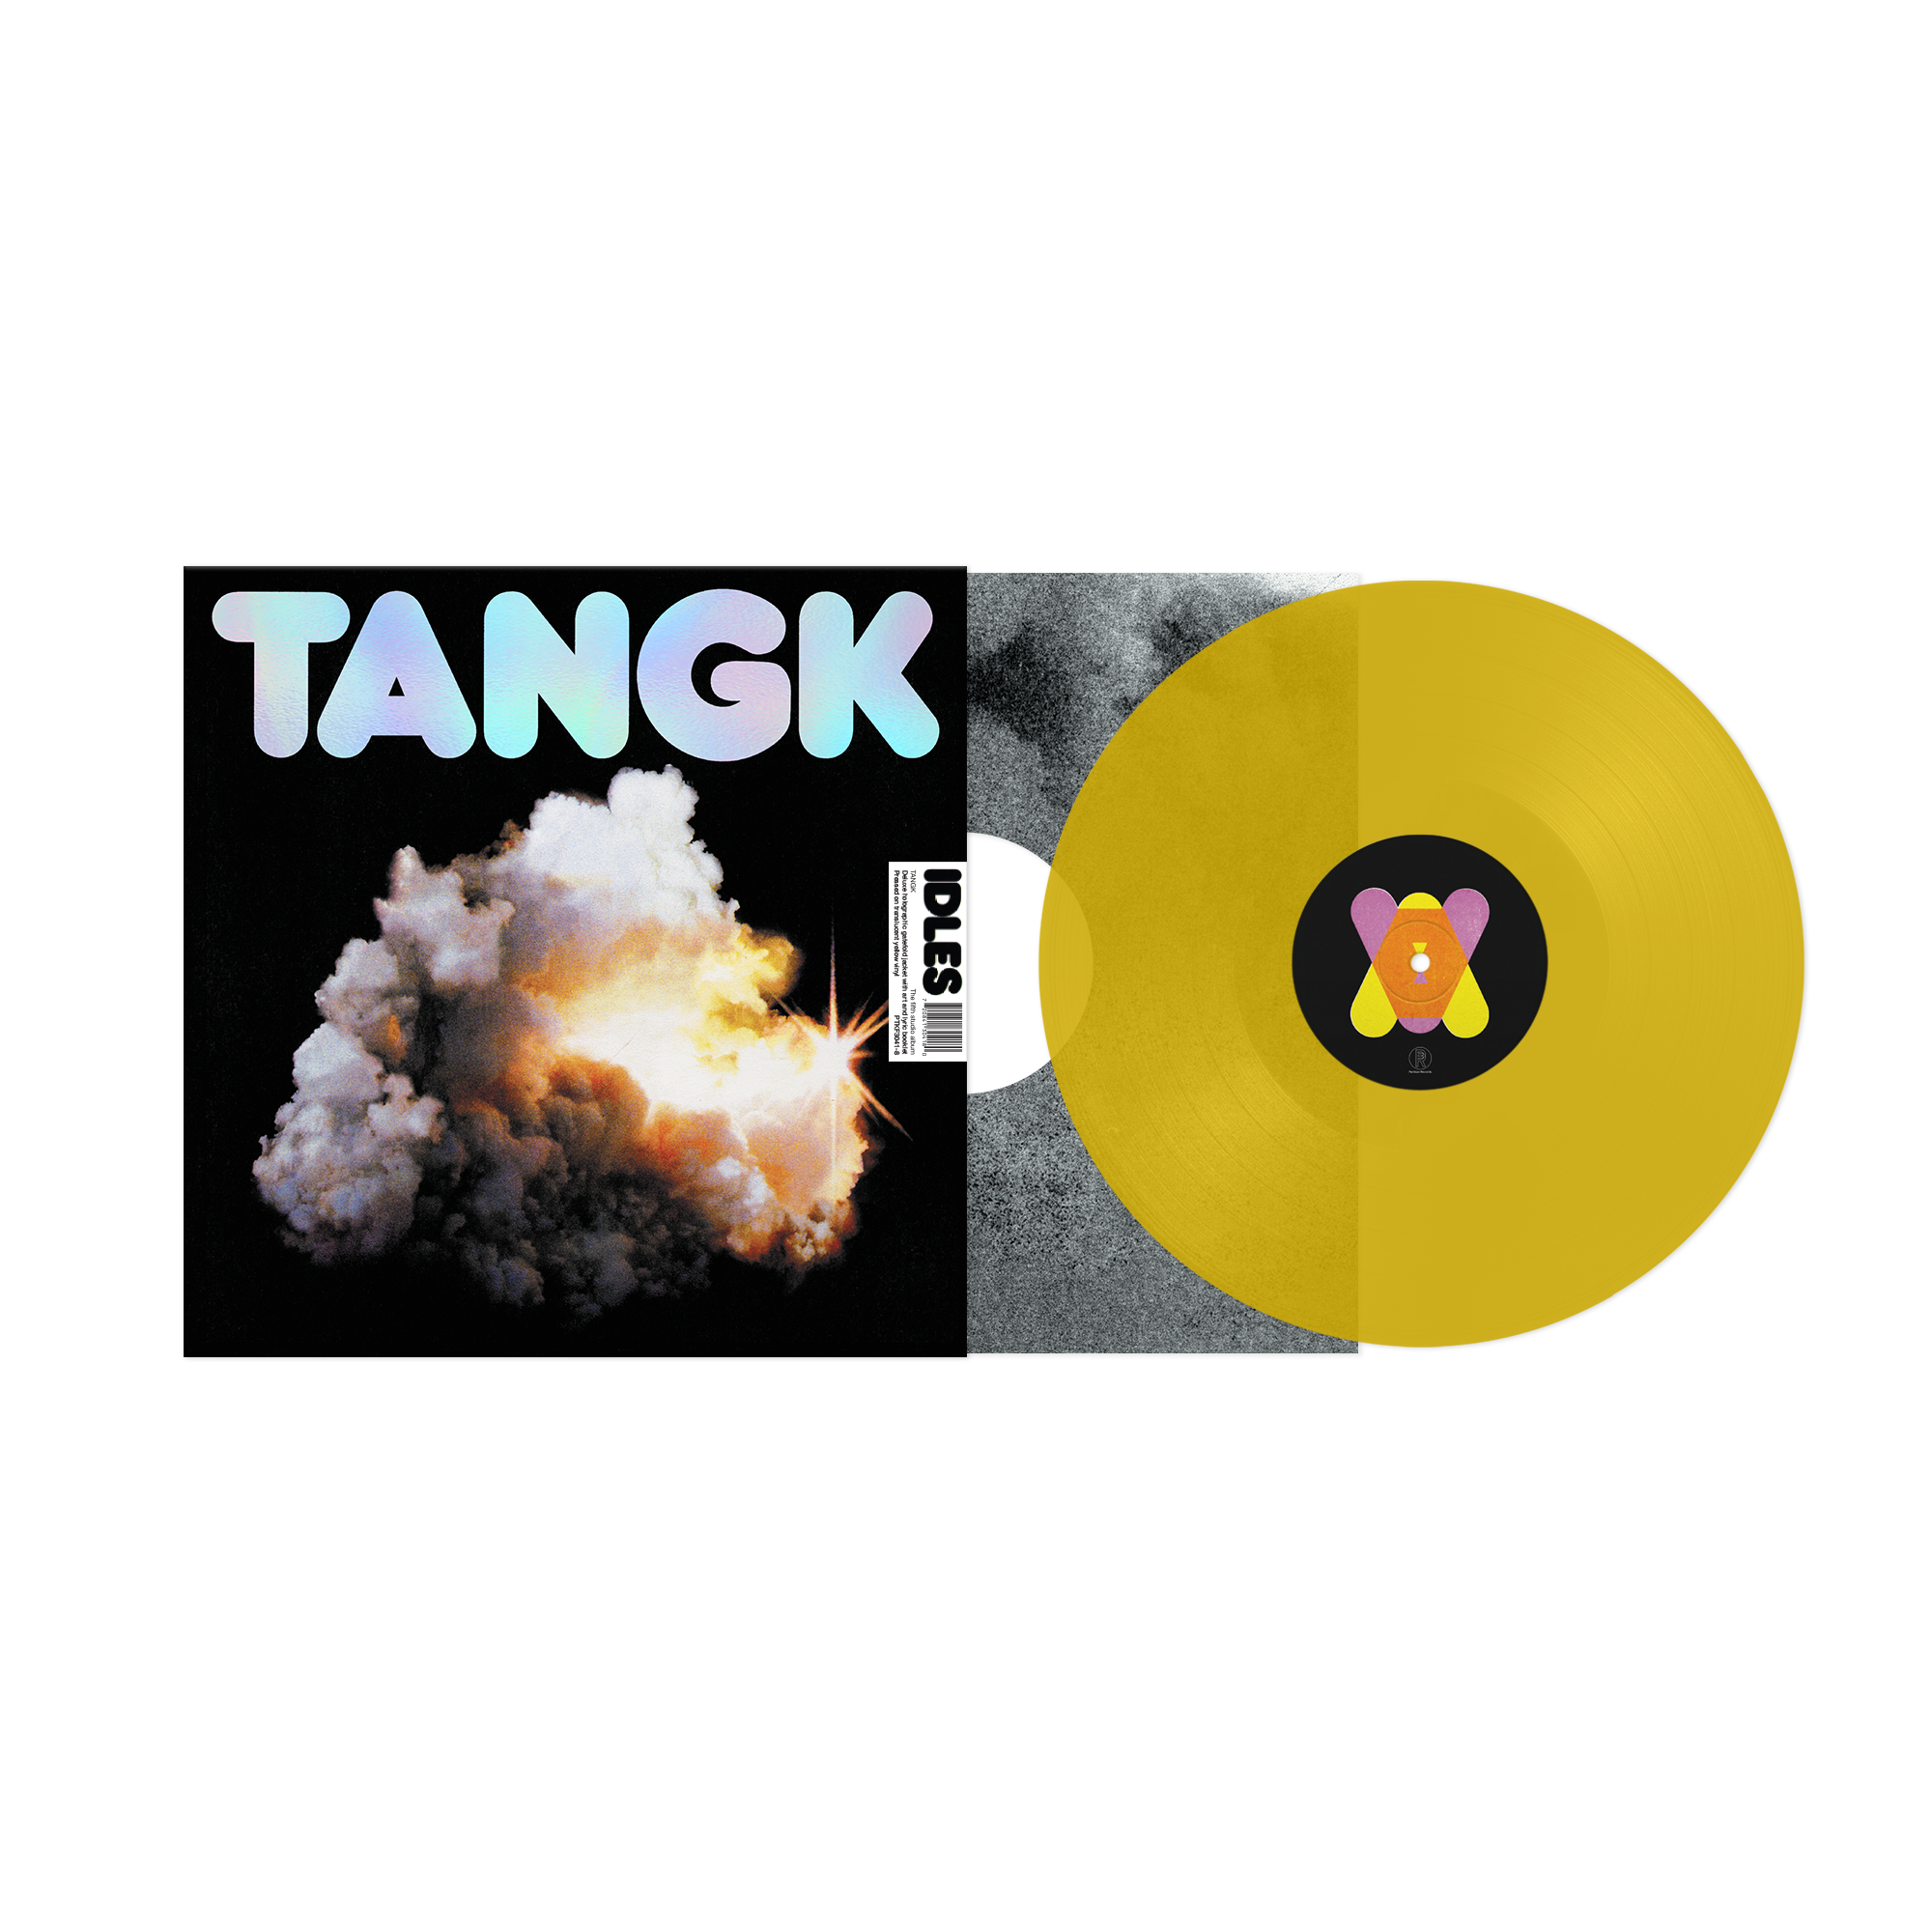 TANGK: Limited Translucent Yellow Deluxe Vinyl LP + Exclusive Slipmat